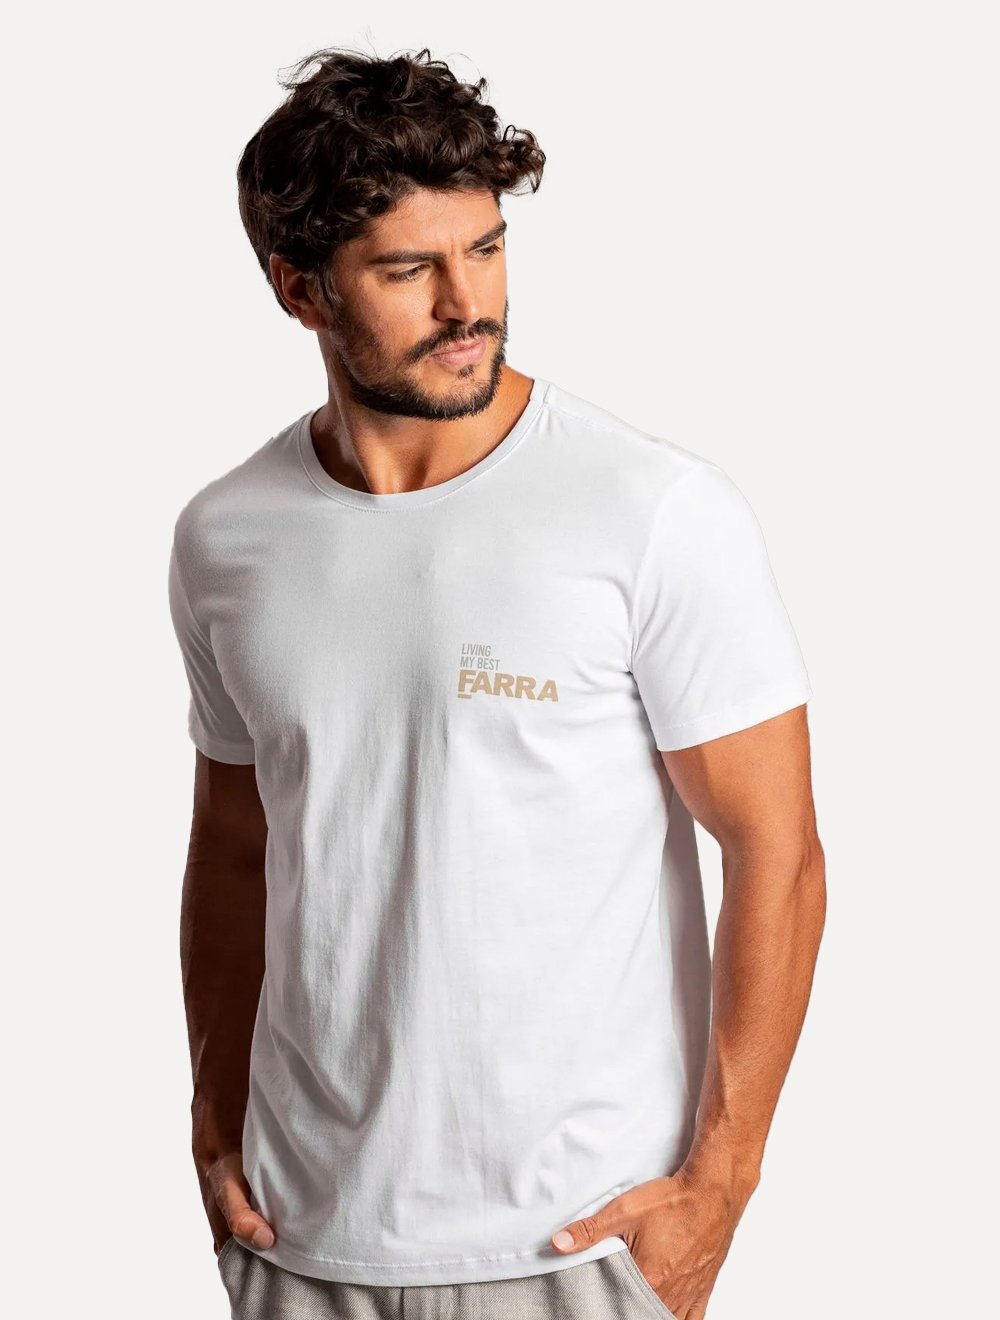 Camiseta Sergio K Masculina Farra Branca